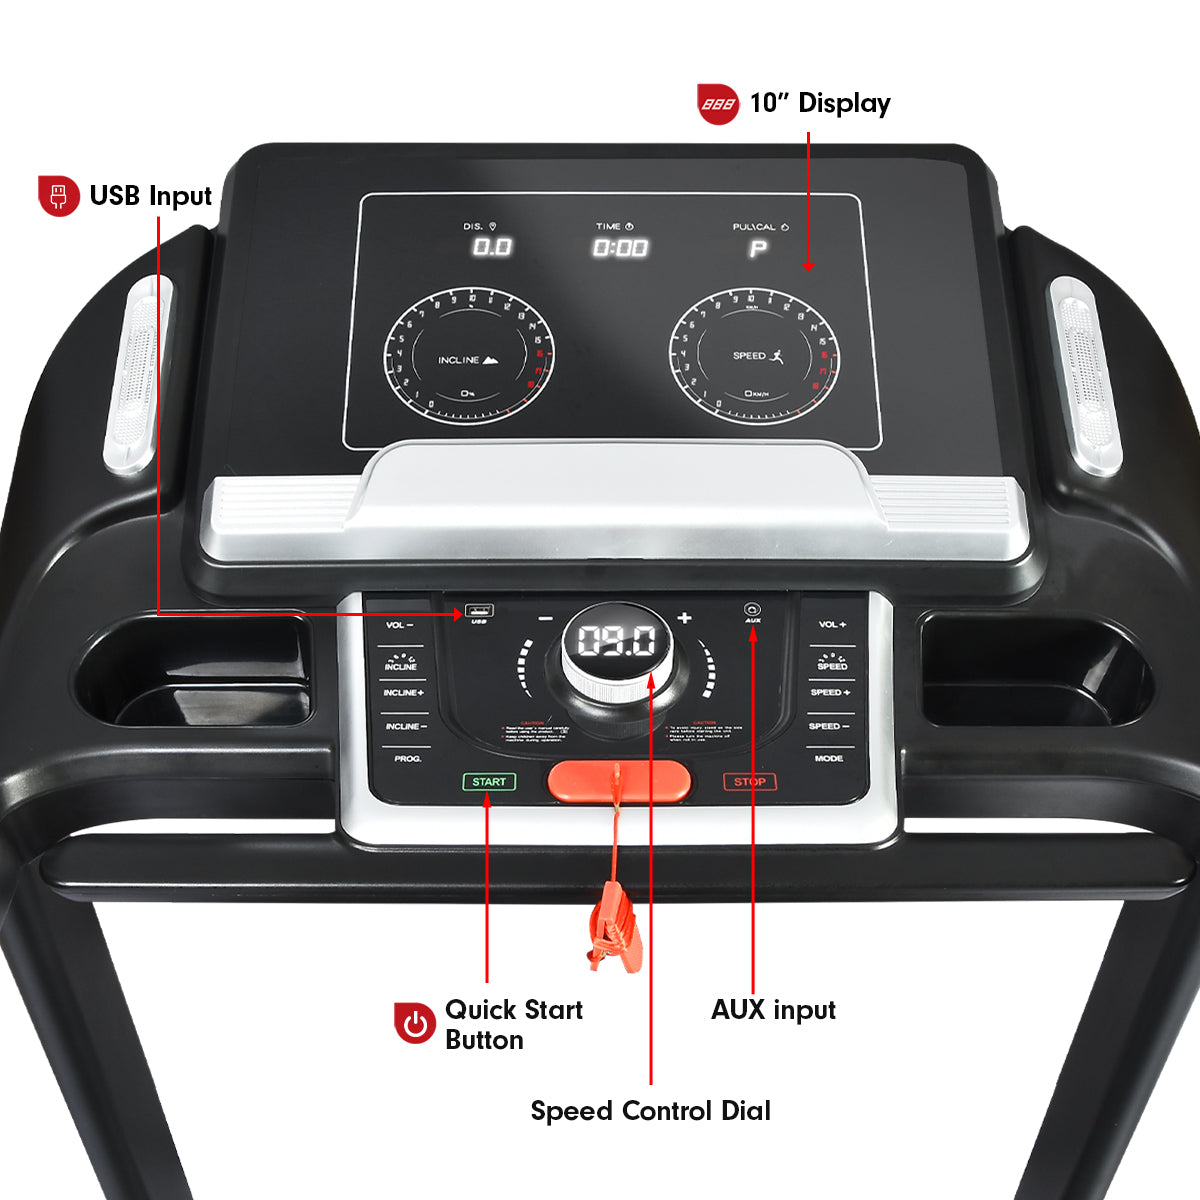 Powertrain MX3 Treadmill